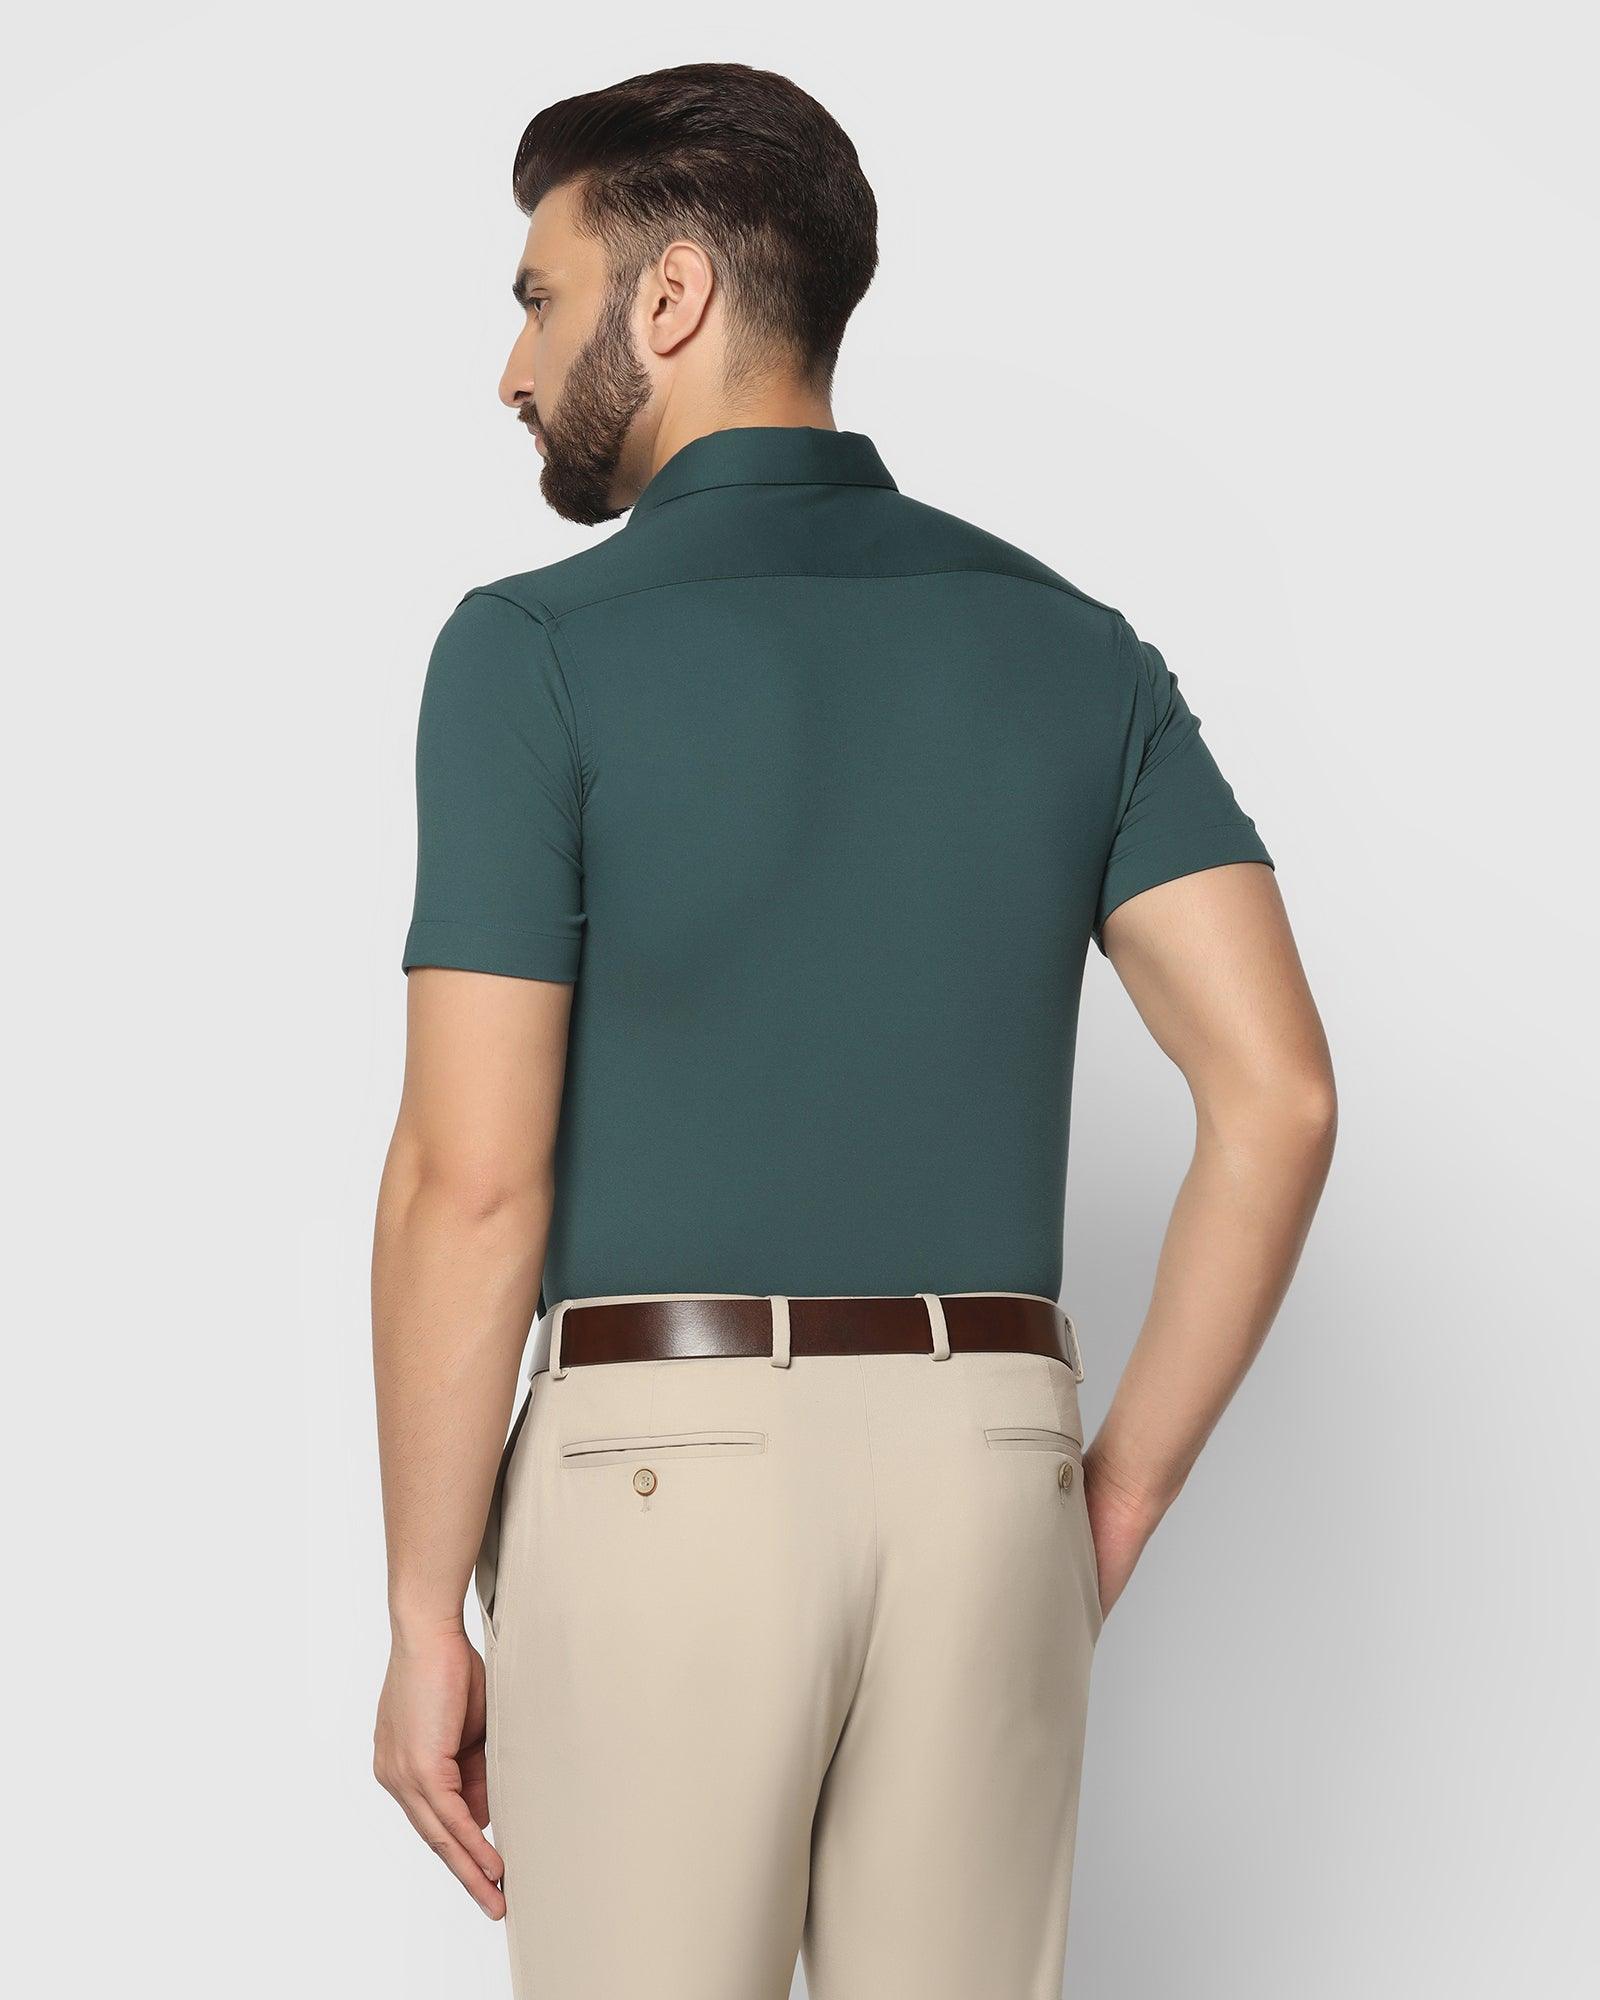 Formal Half Sleeve Teal Solid Shirt - Primus